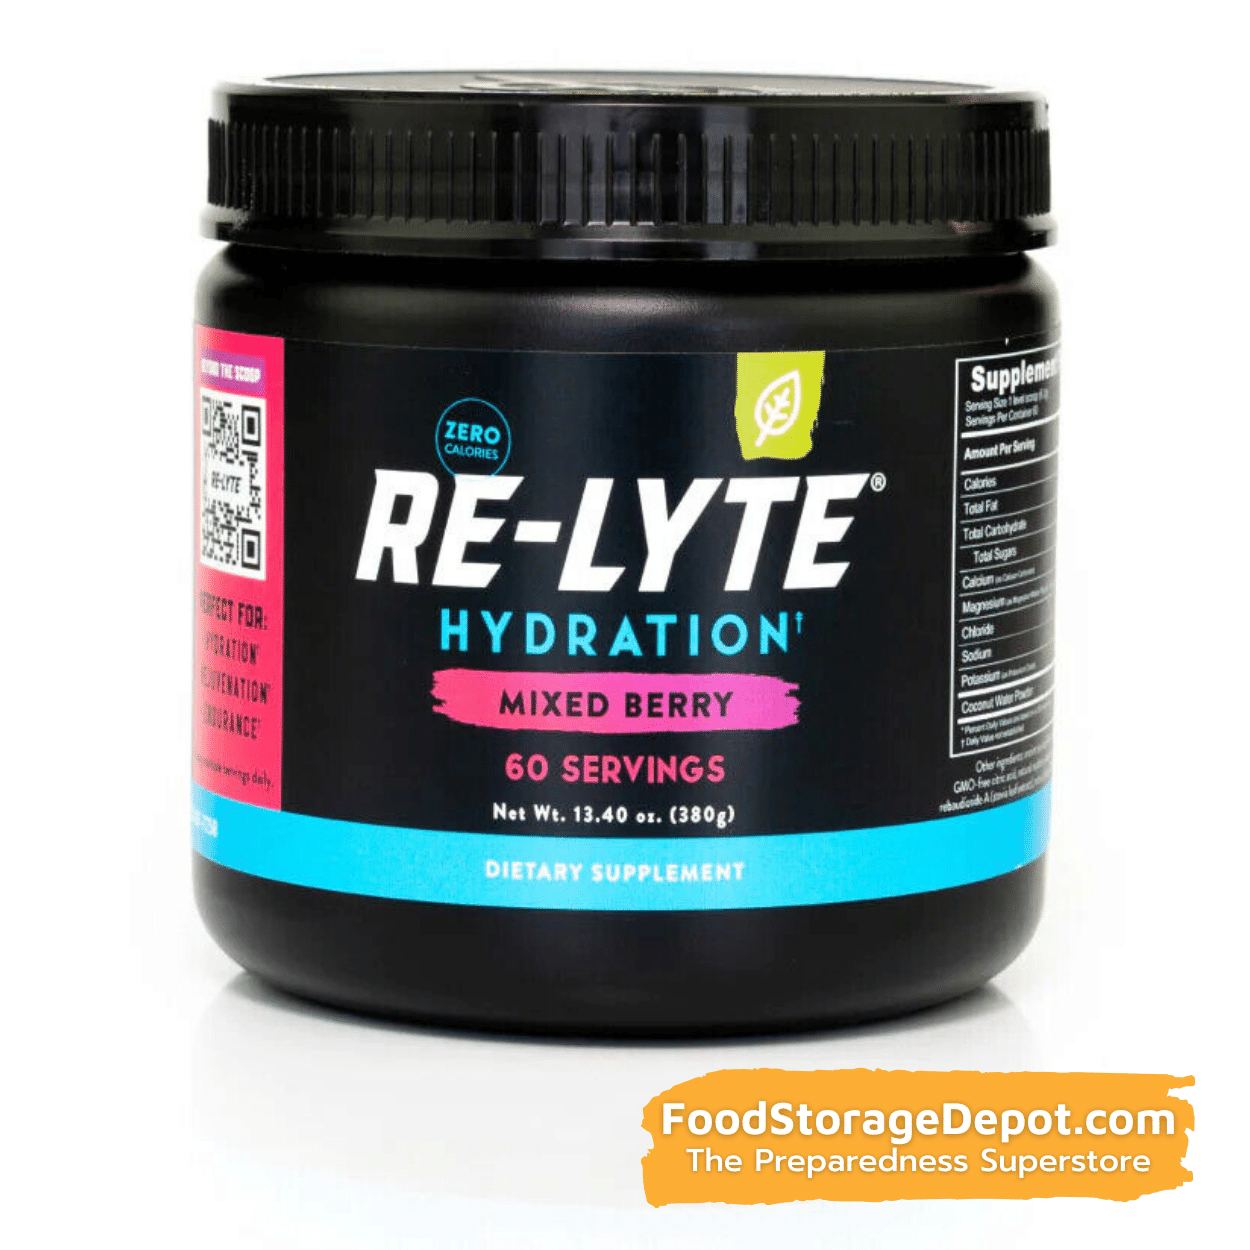 Redmond Re-Lyte® Electrolyte Mix